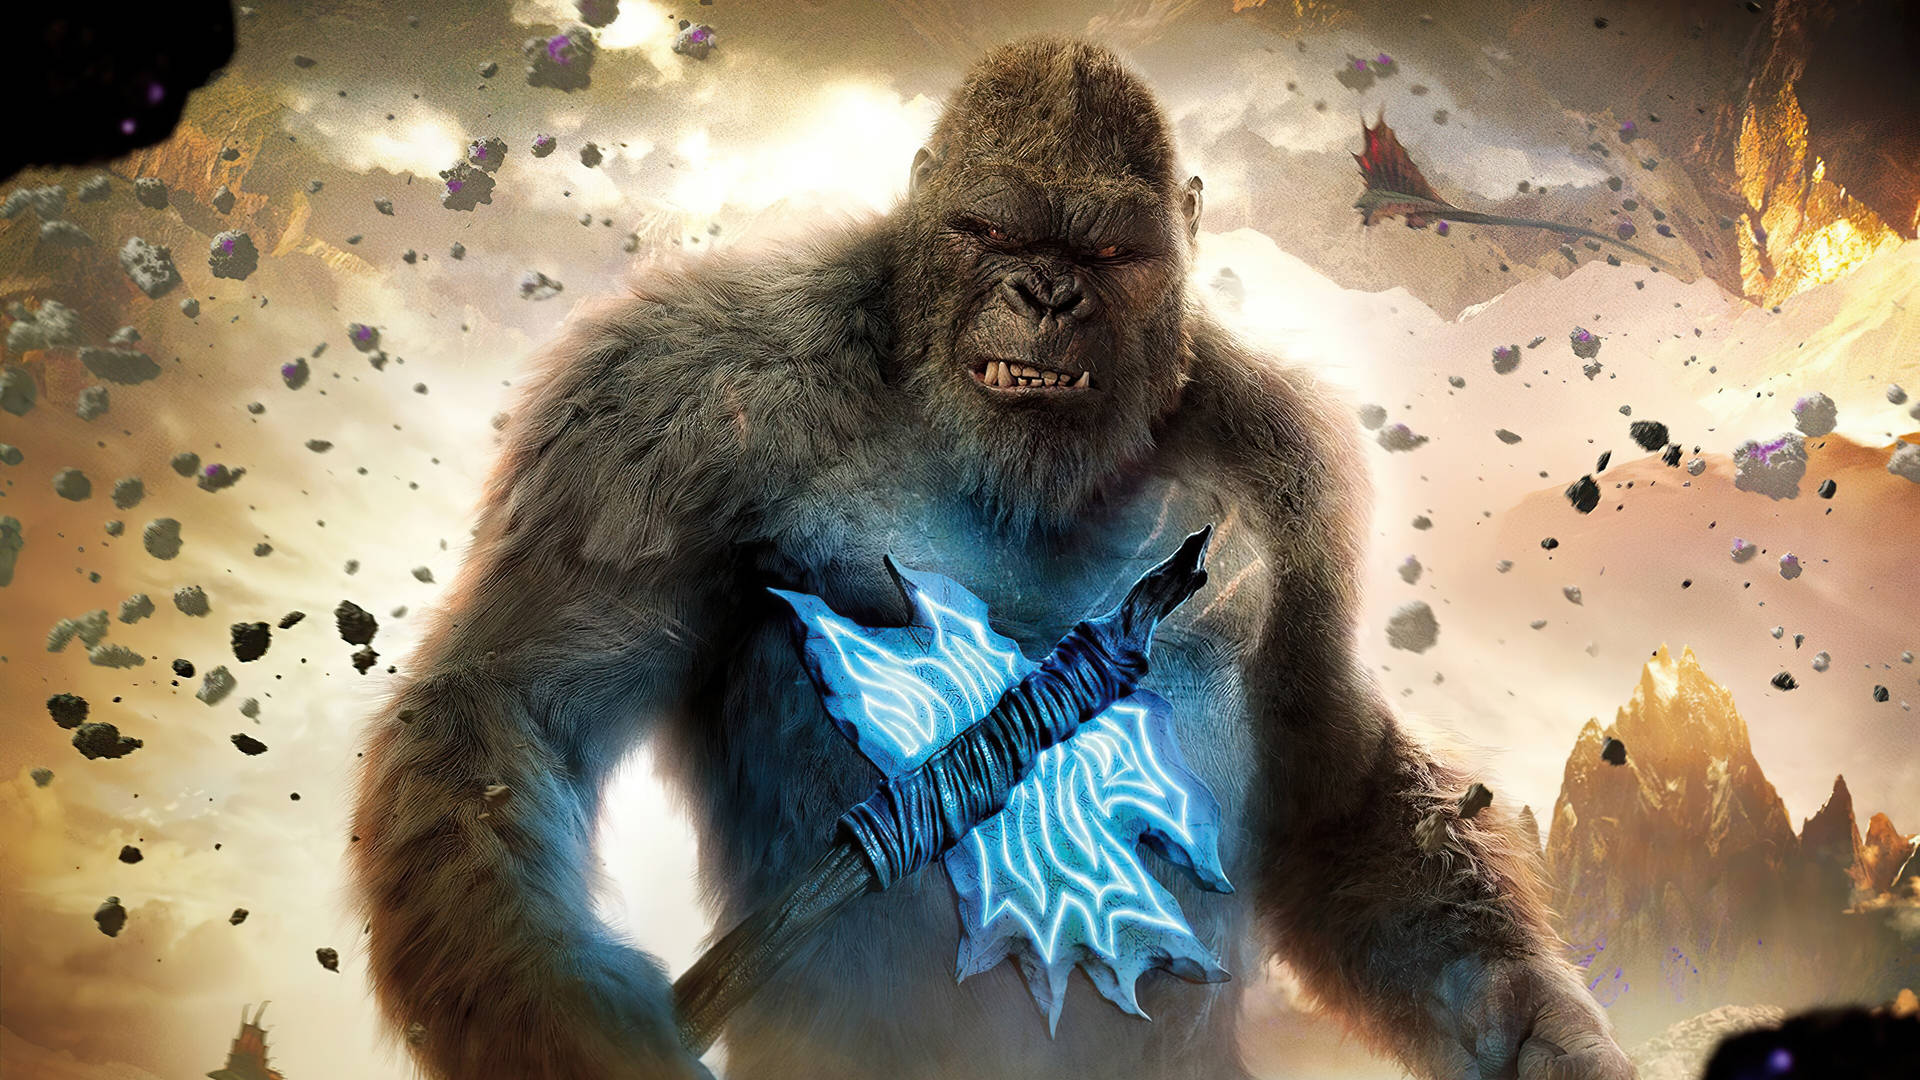 kong kong - apes vs gorillas Wallpaper